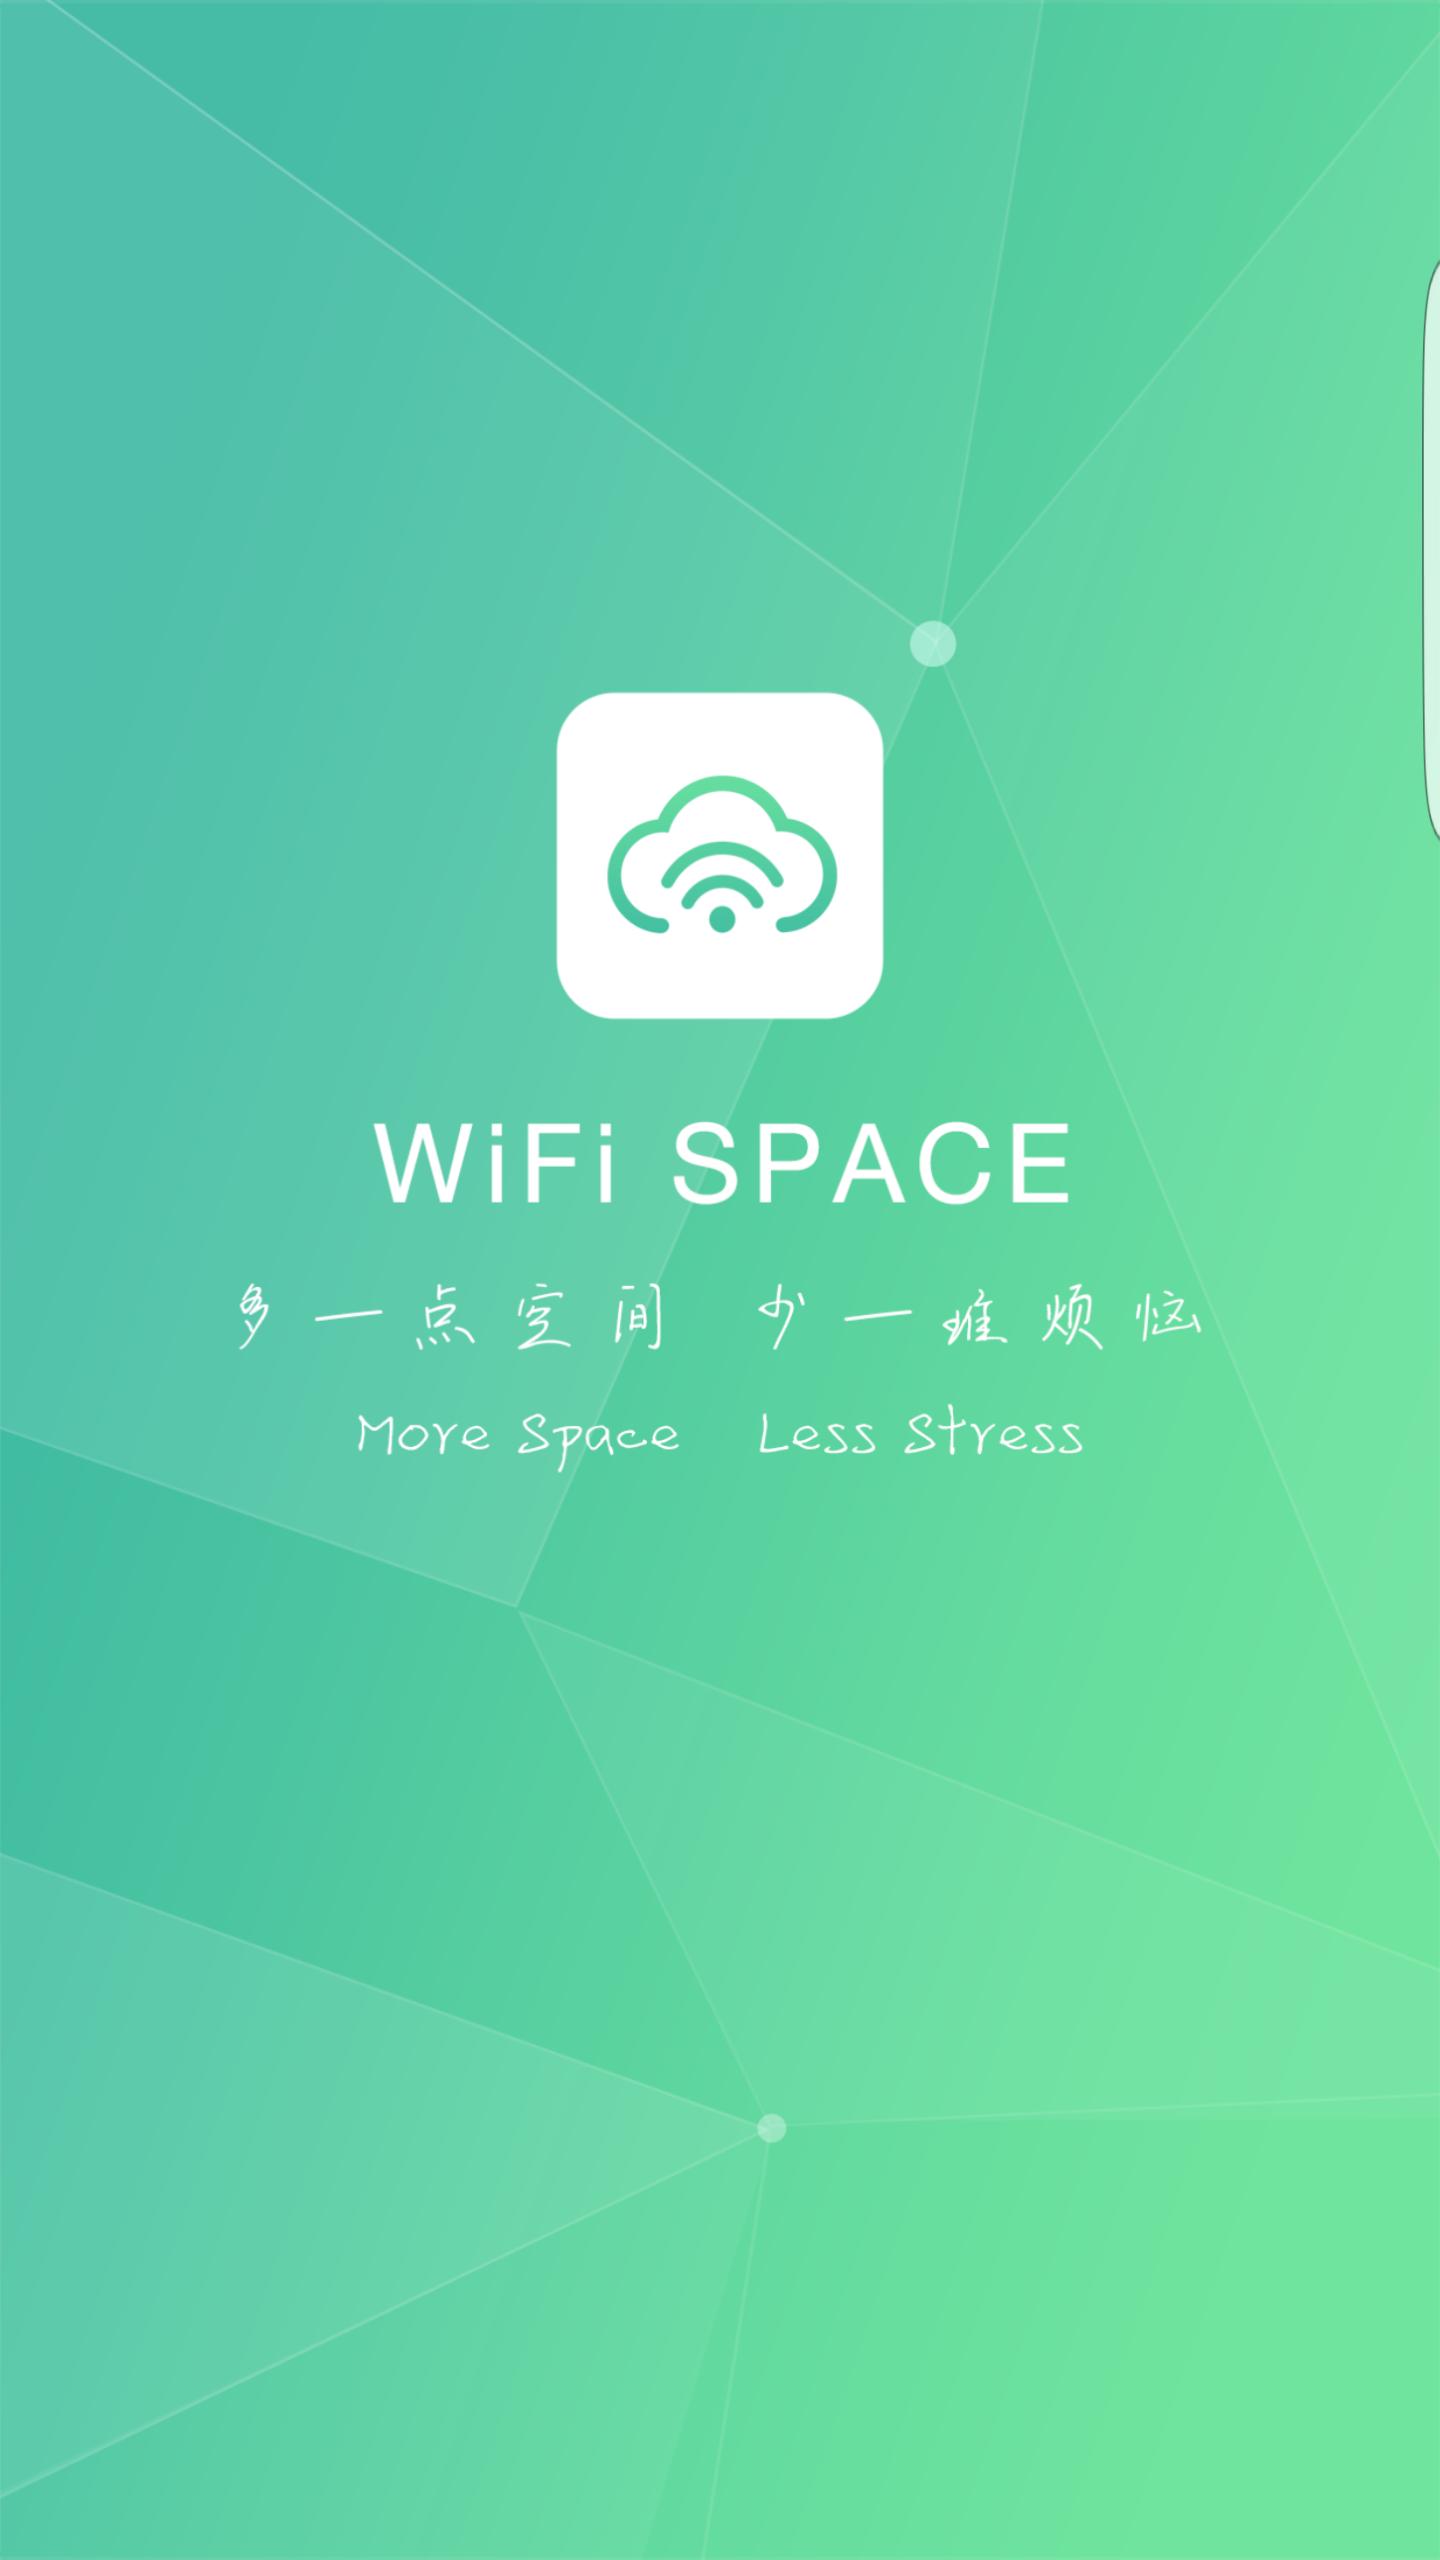 Wifi space